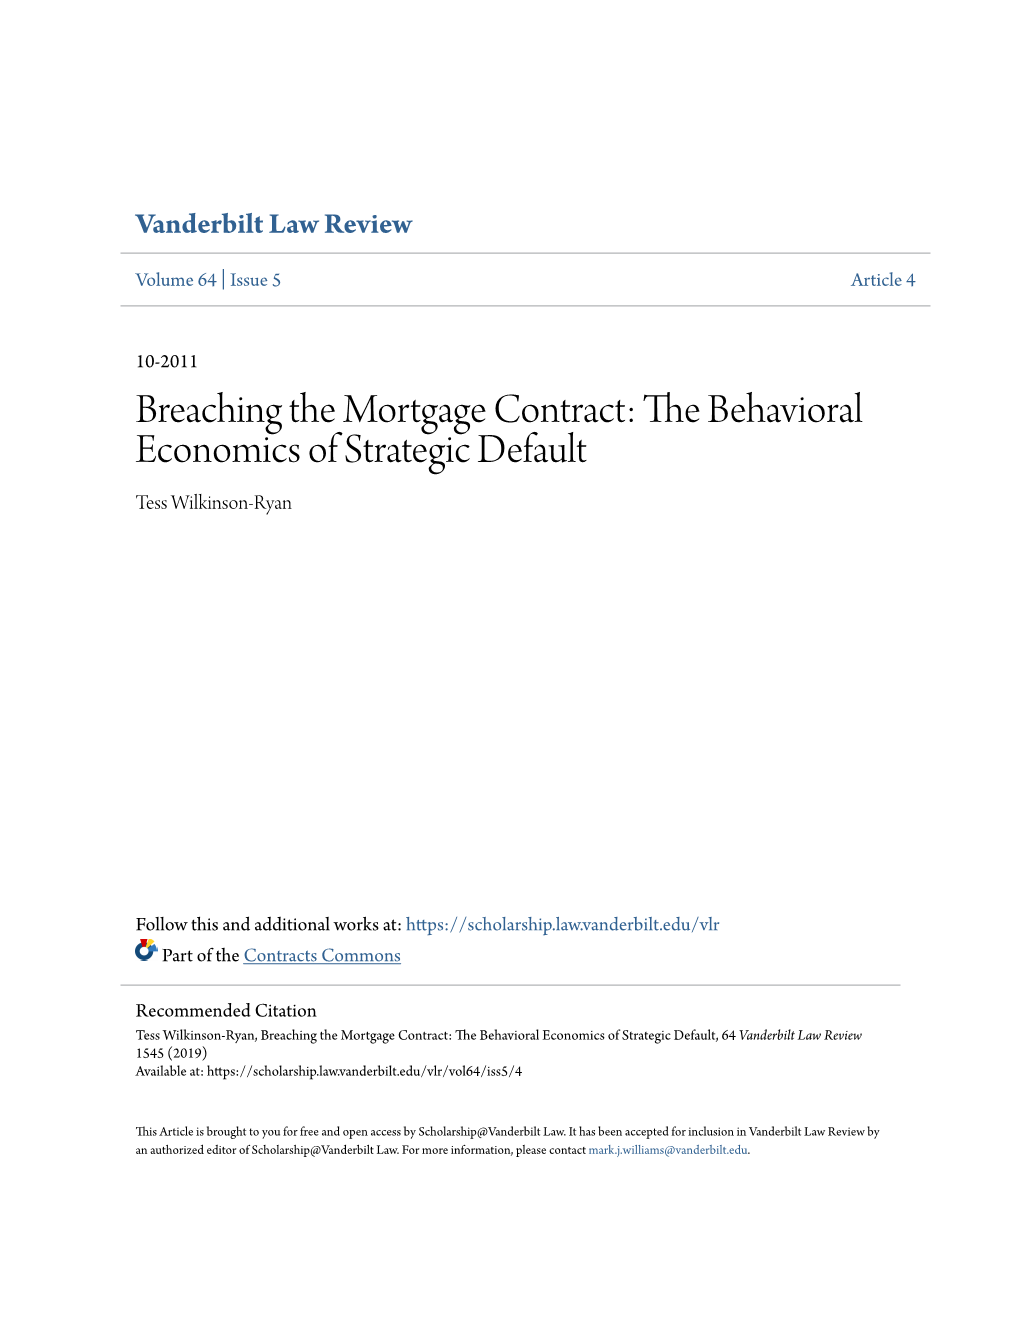 Breaching the Mortgage Contract: the Behavioral Economics of Strategic Default Tess Wilkinson-Ryan